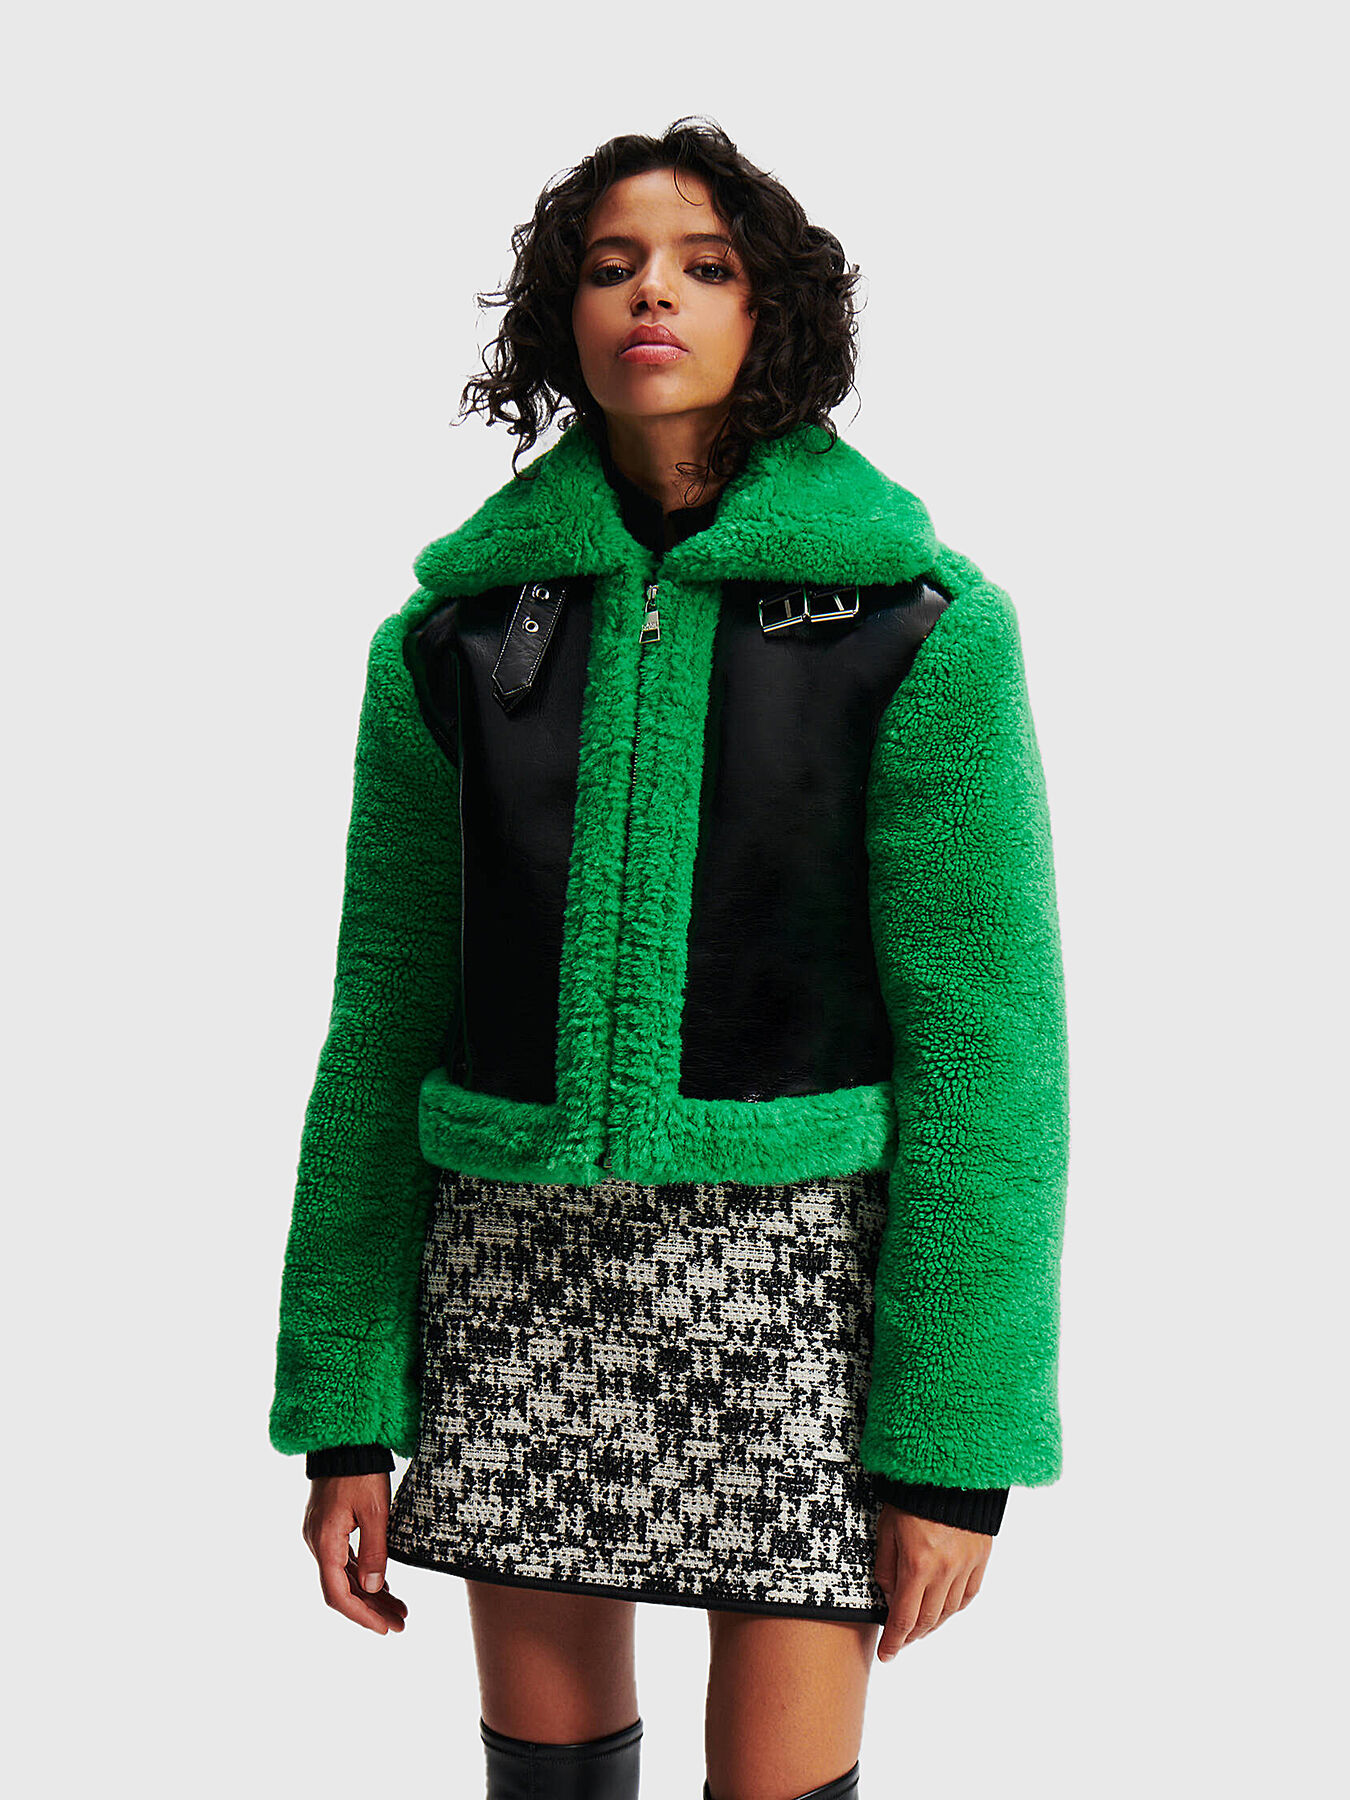 Jacket in green color brand Karl Lagerfeld — Globalbrandsstore.com/en